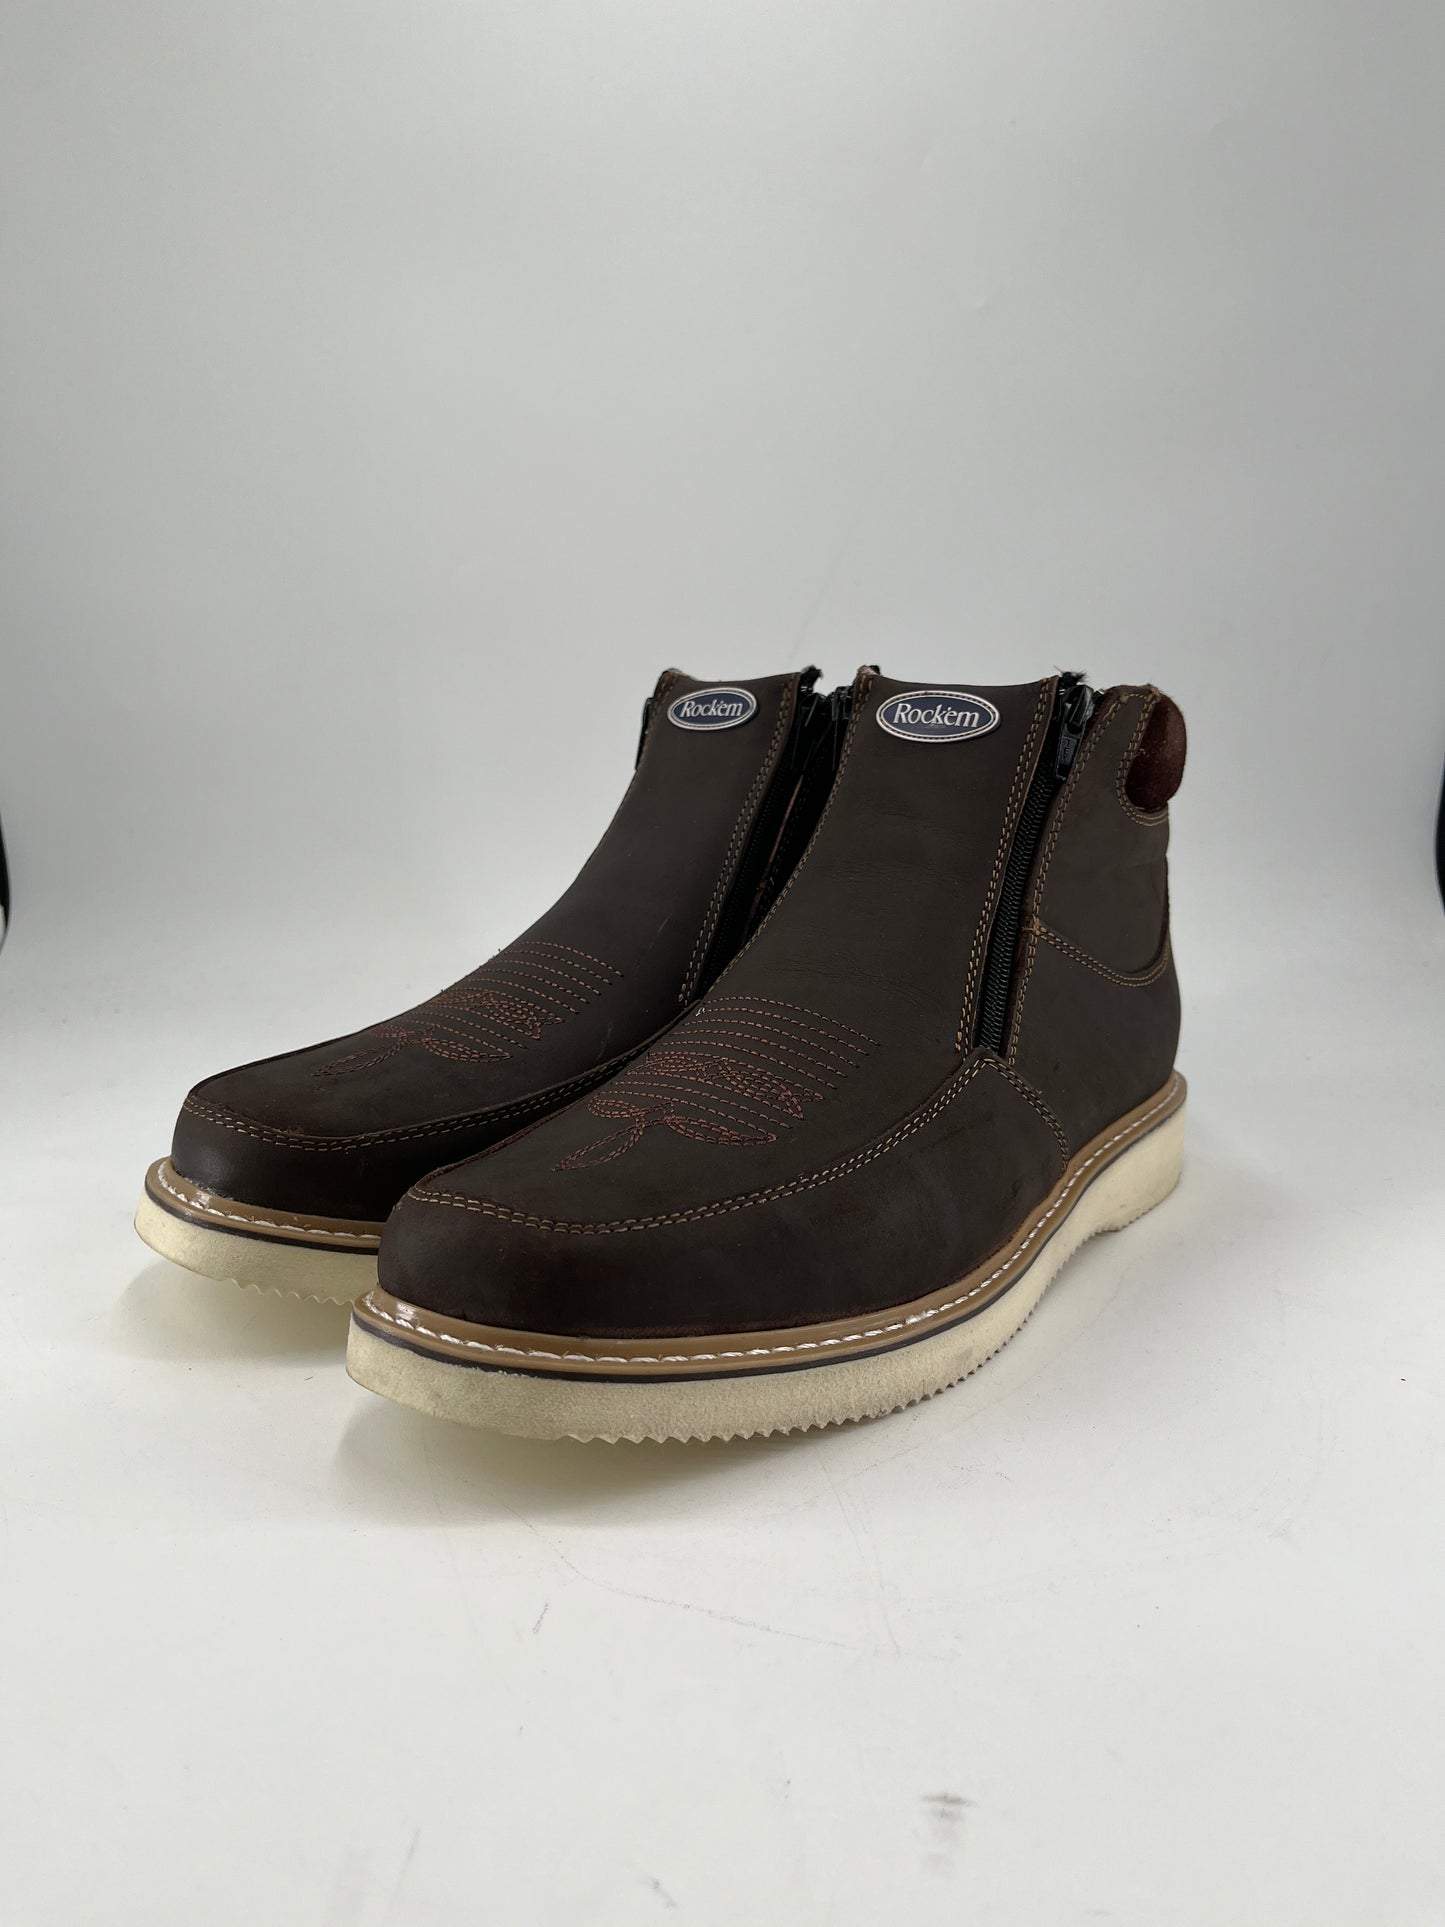 920 Stylish Men's Handmade Boots